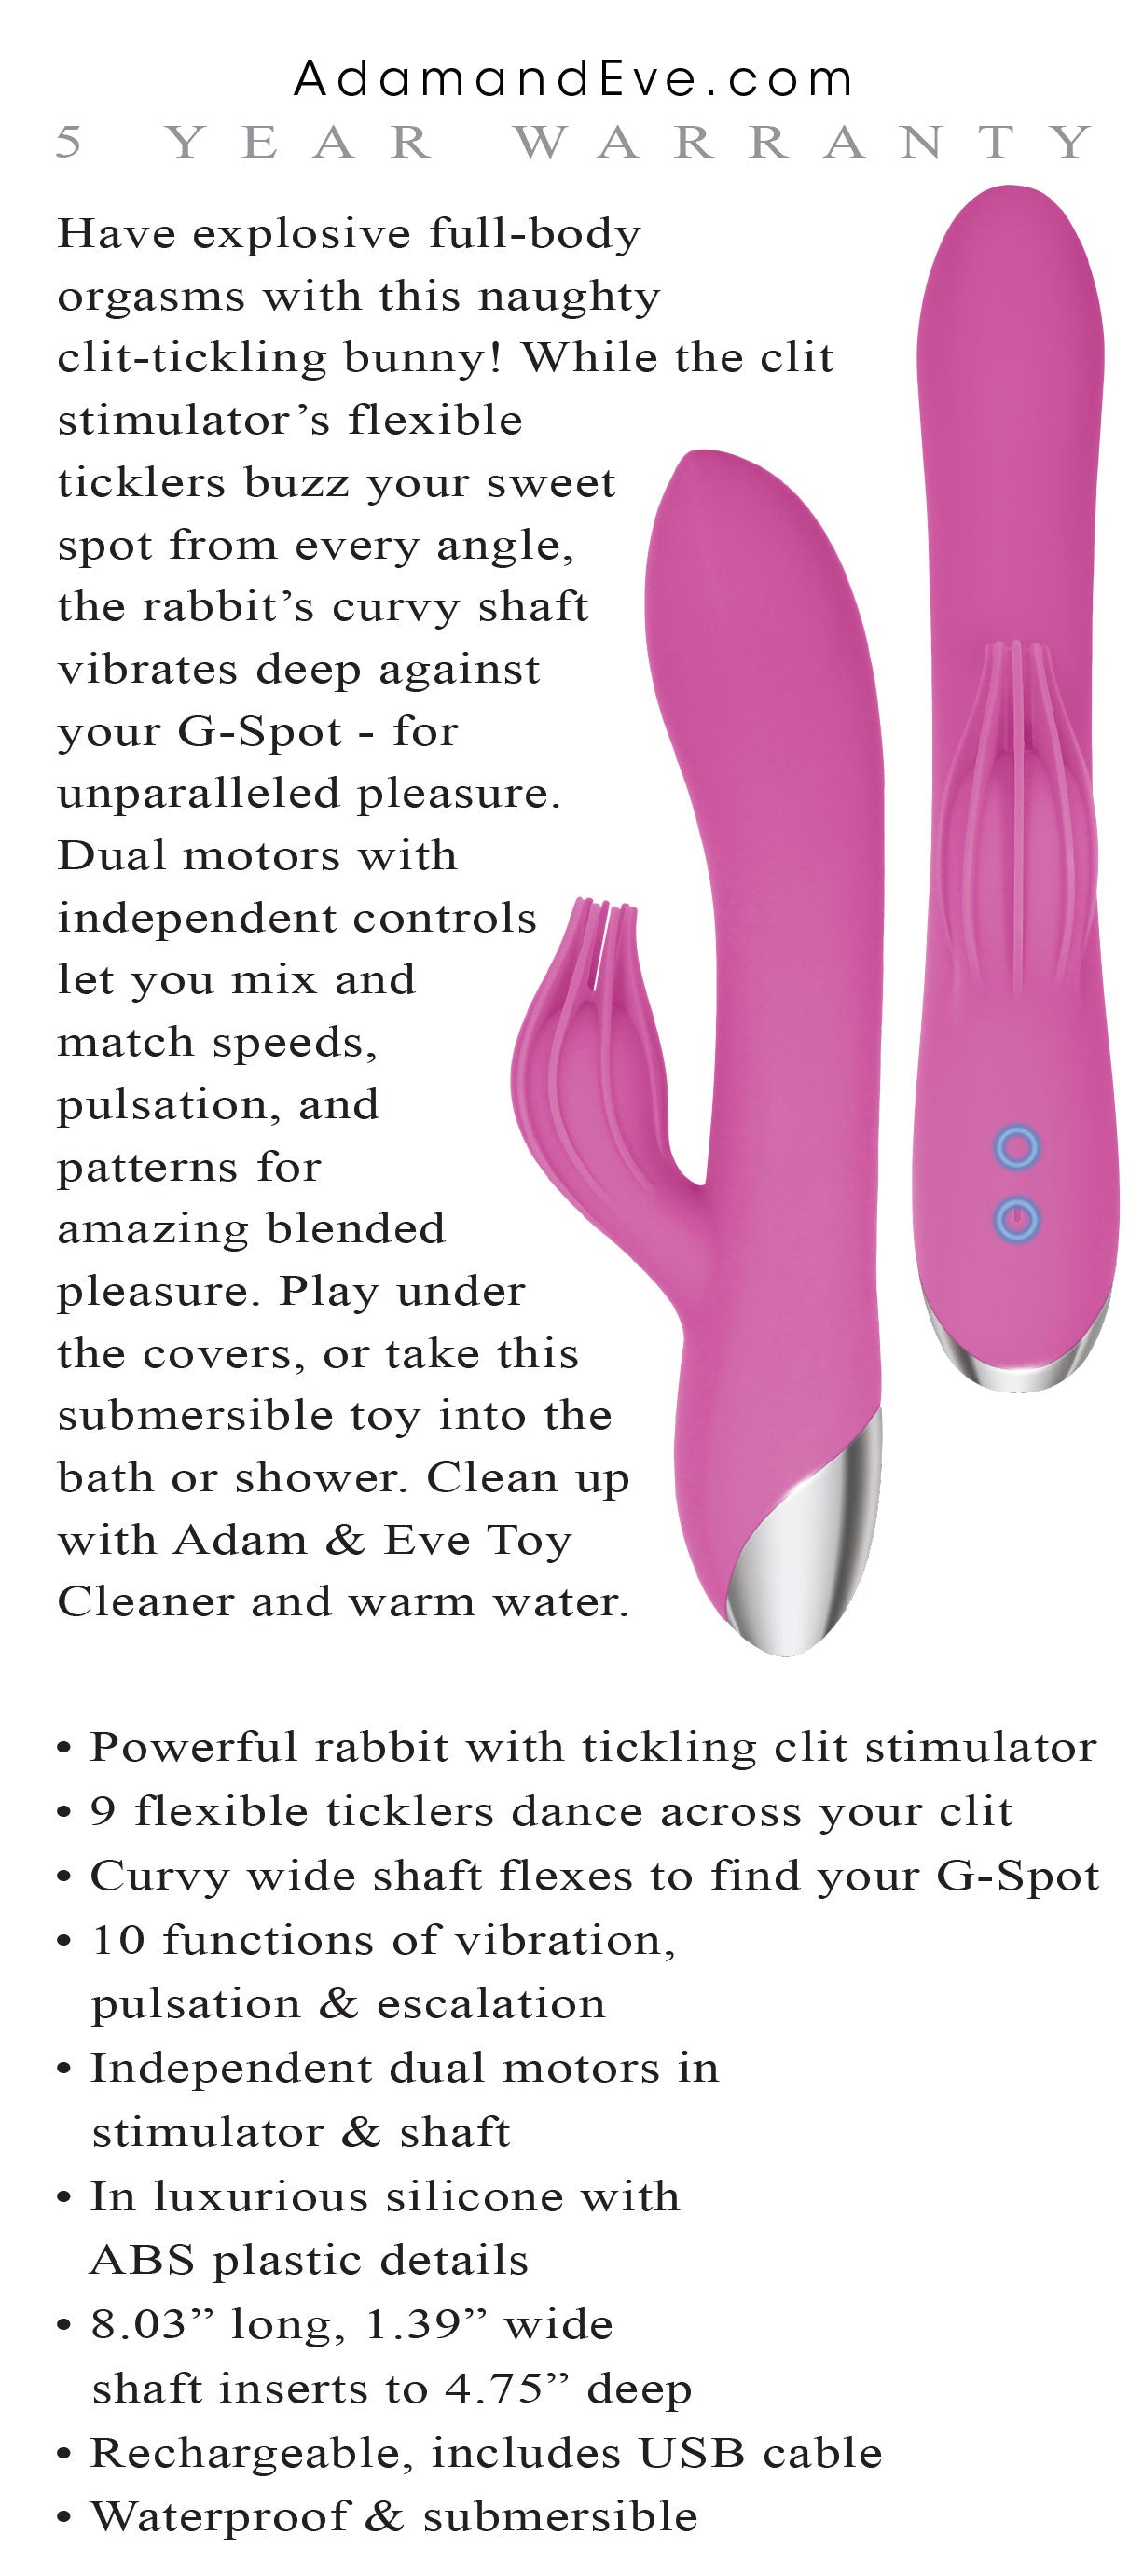 Eve's Clit Tickling Rabbit